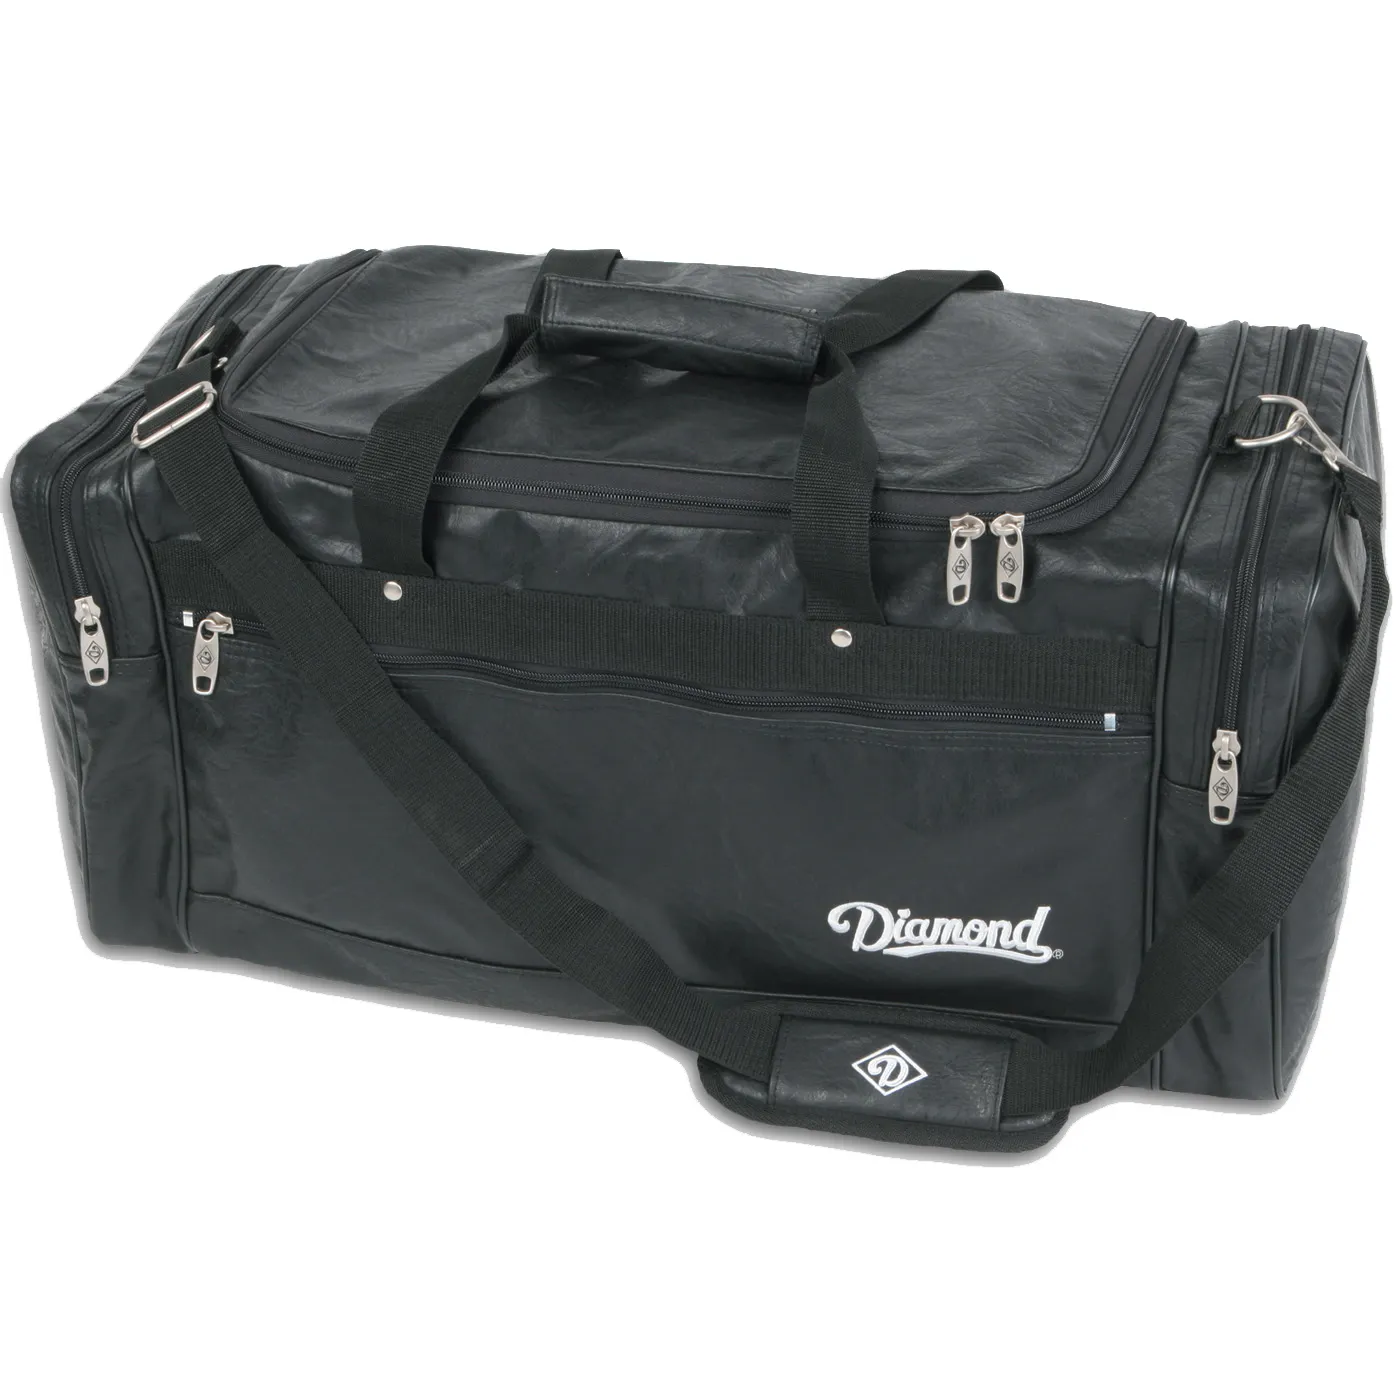 5033 - Diamond Equipment Bag